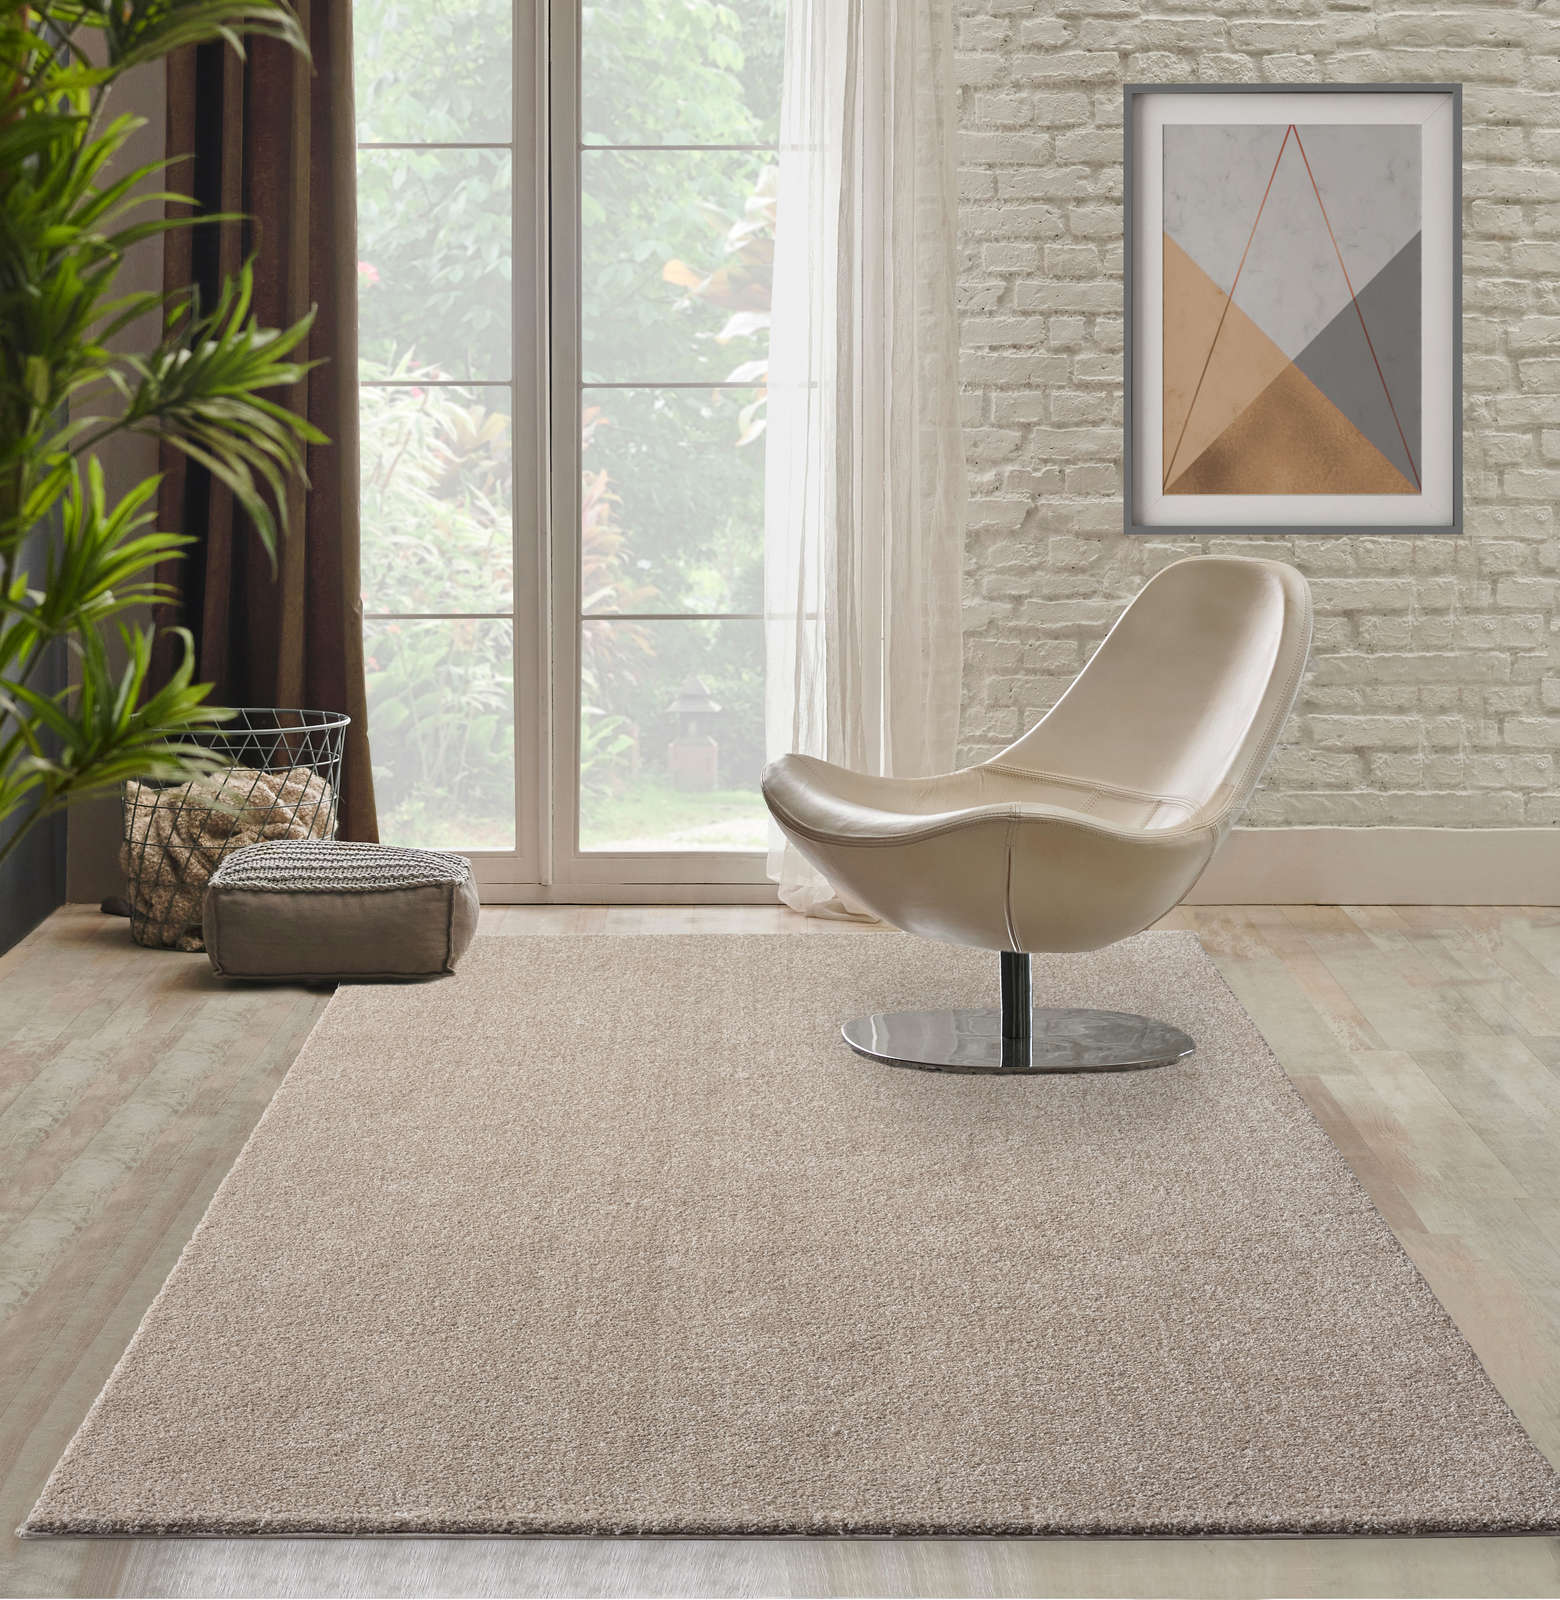             Soft short pile carpet in beige - 290 x 200 cm
        